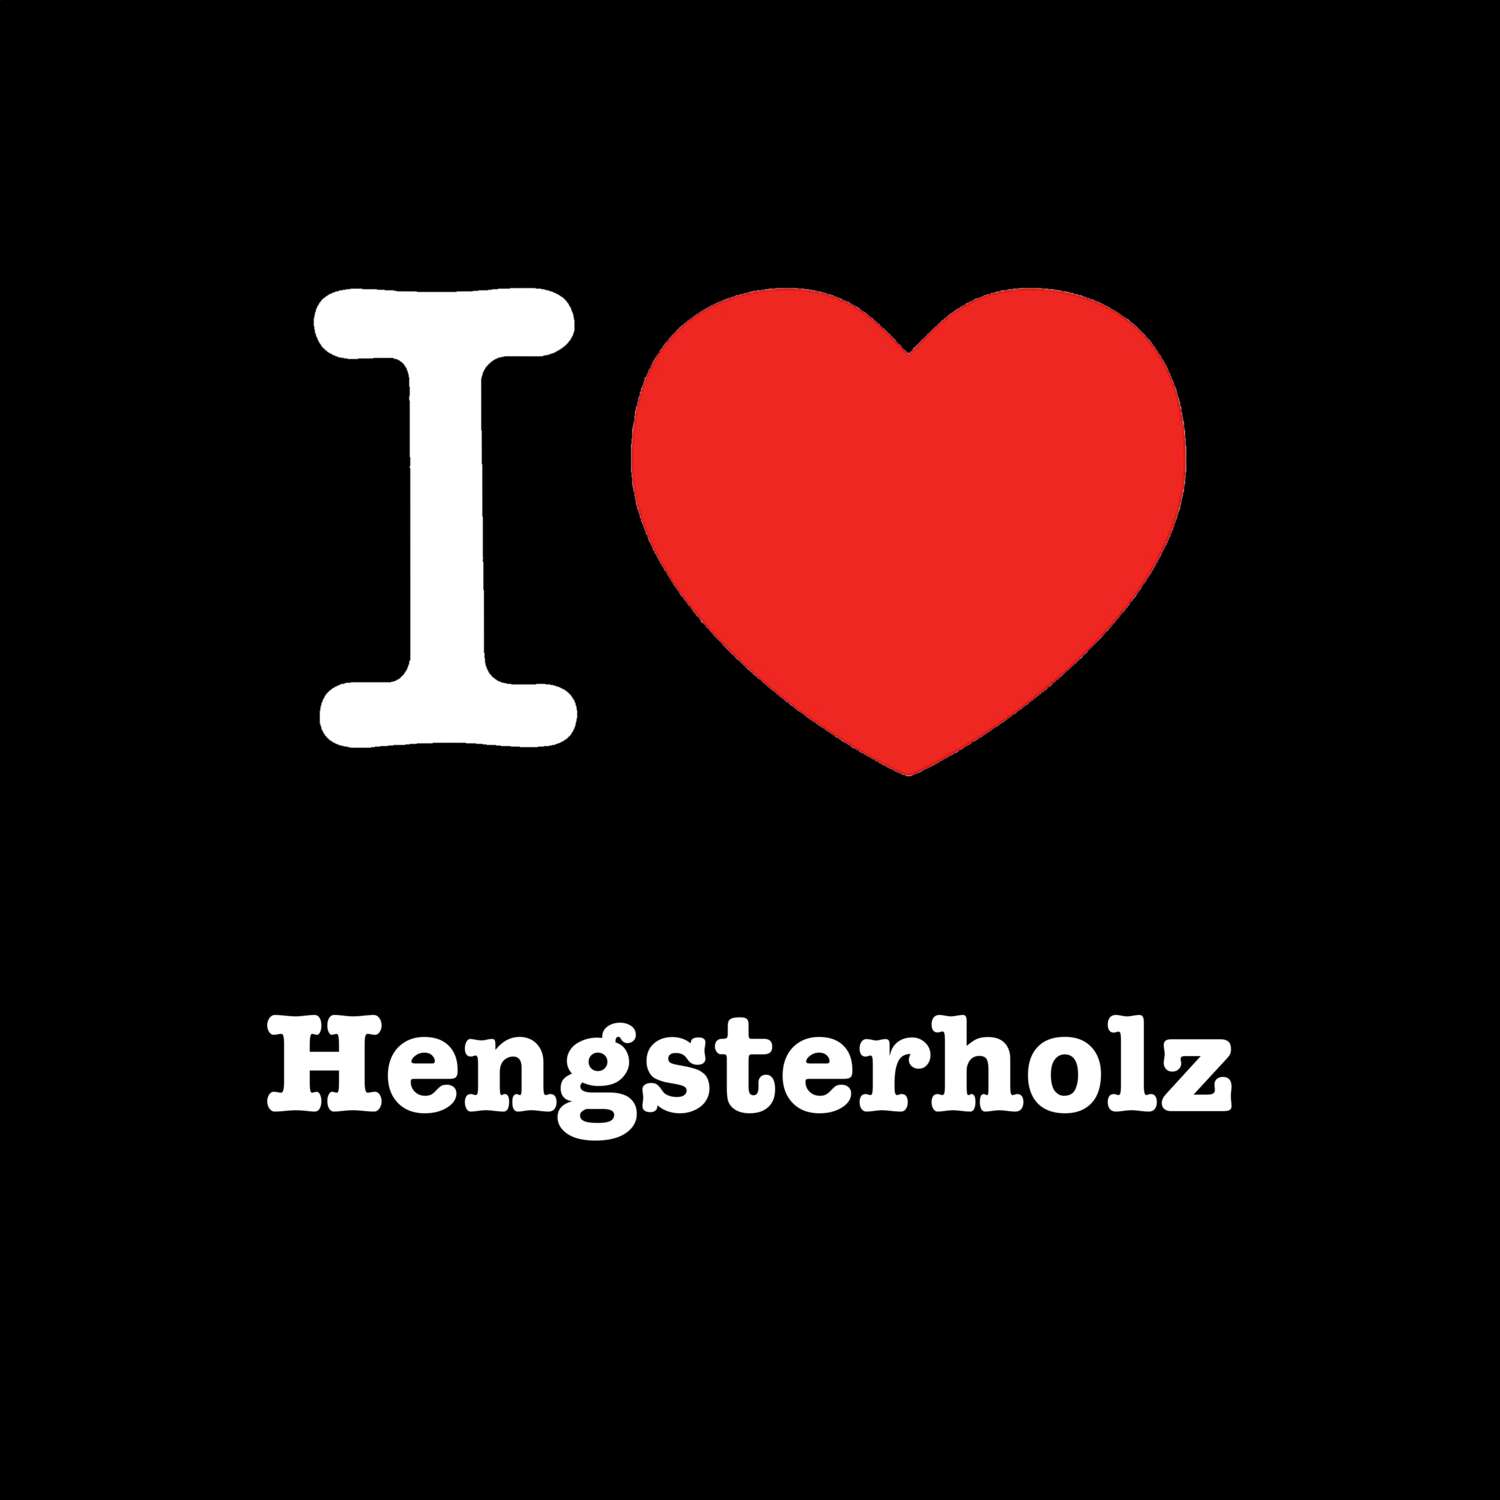 Hengsterholz T-Shirt »I love«